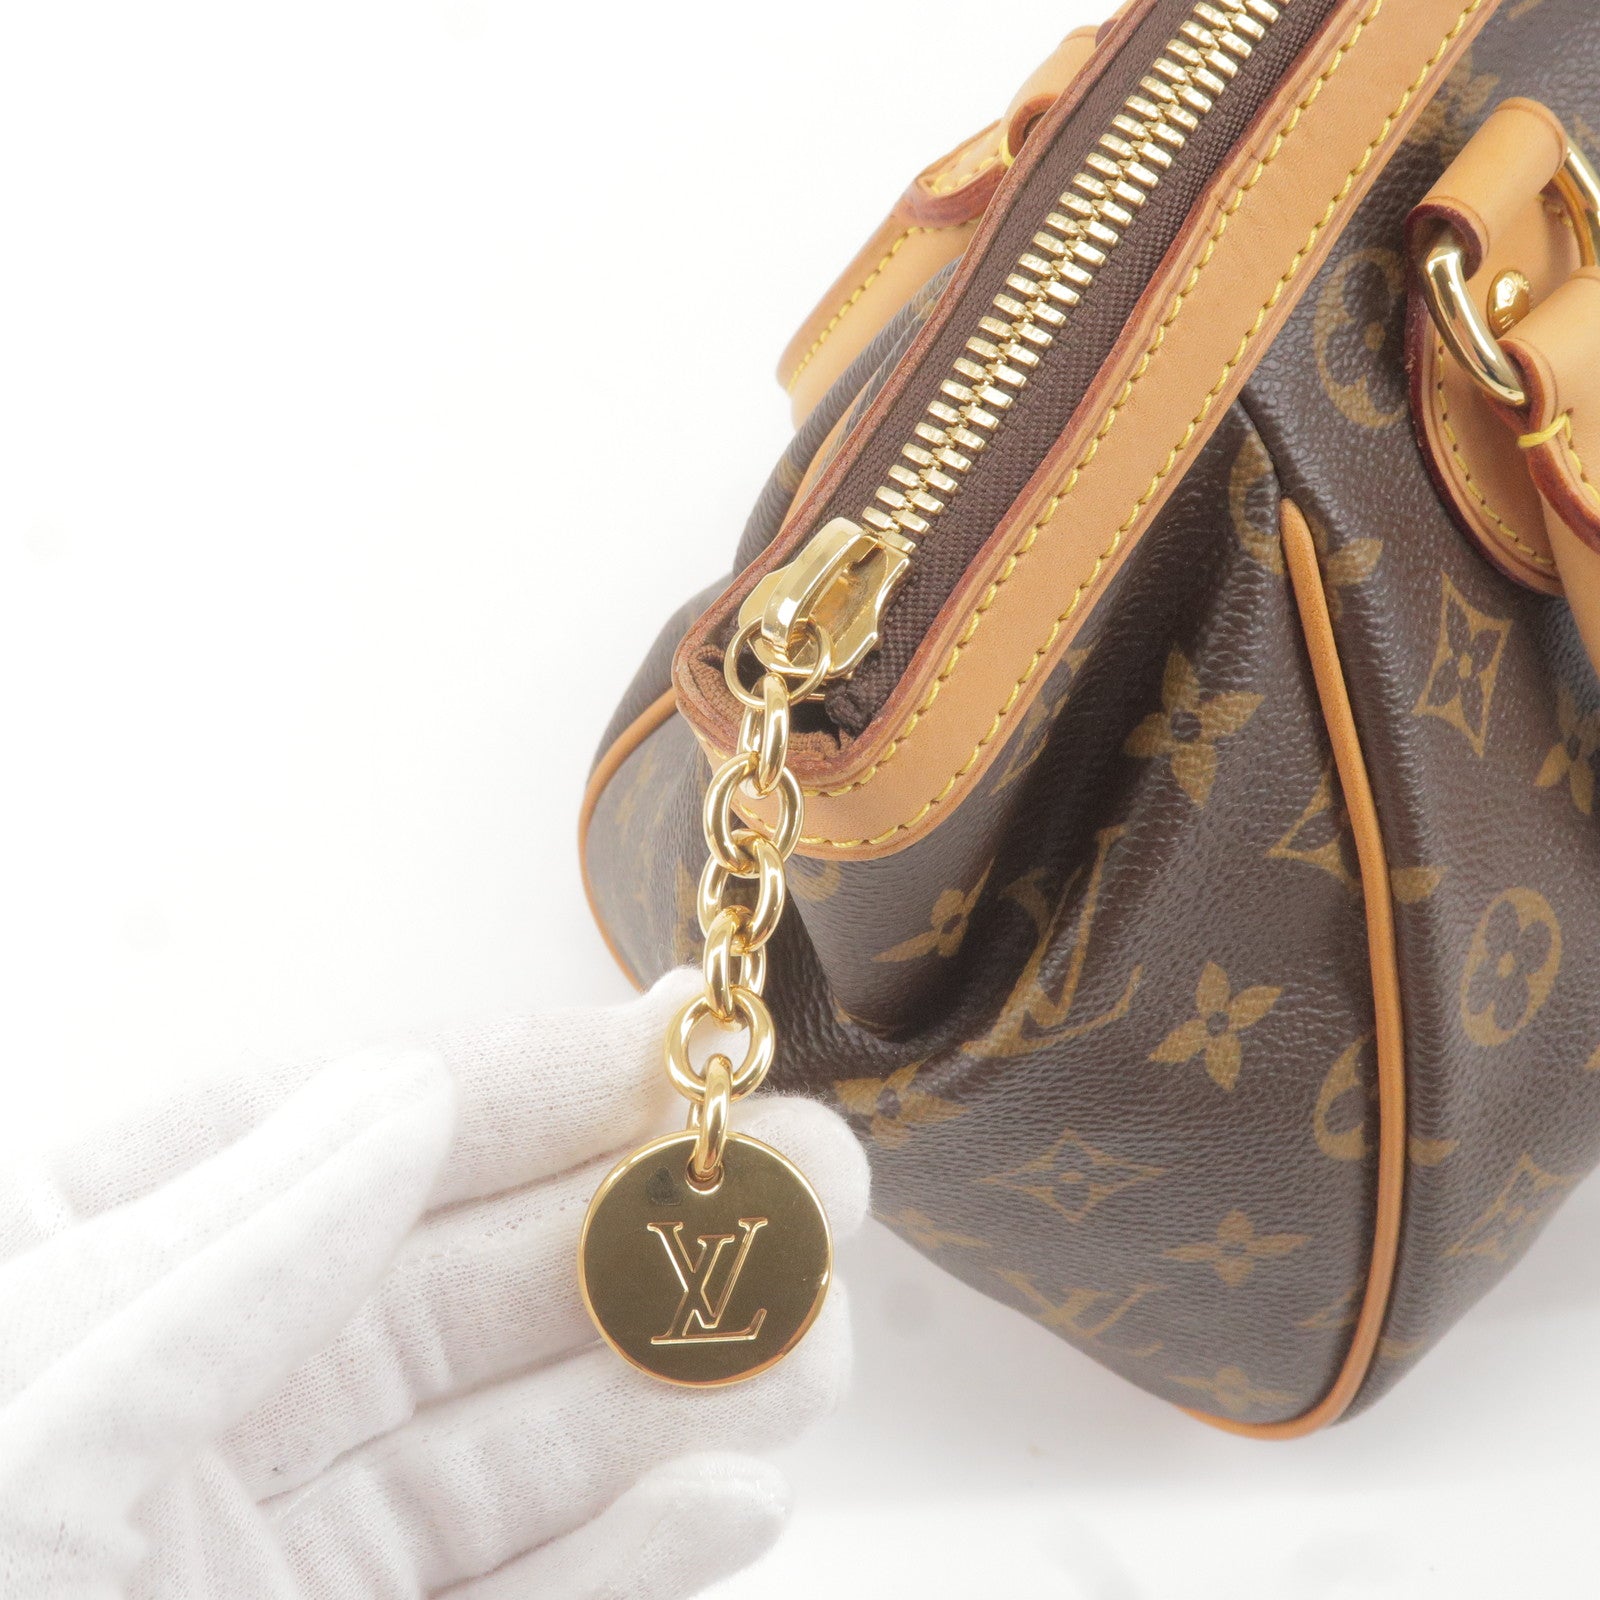 Louis Vuitton Sac Souple 35 Review - Classic Luxury Info before you buy! 